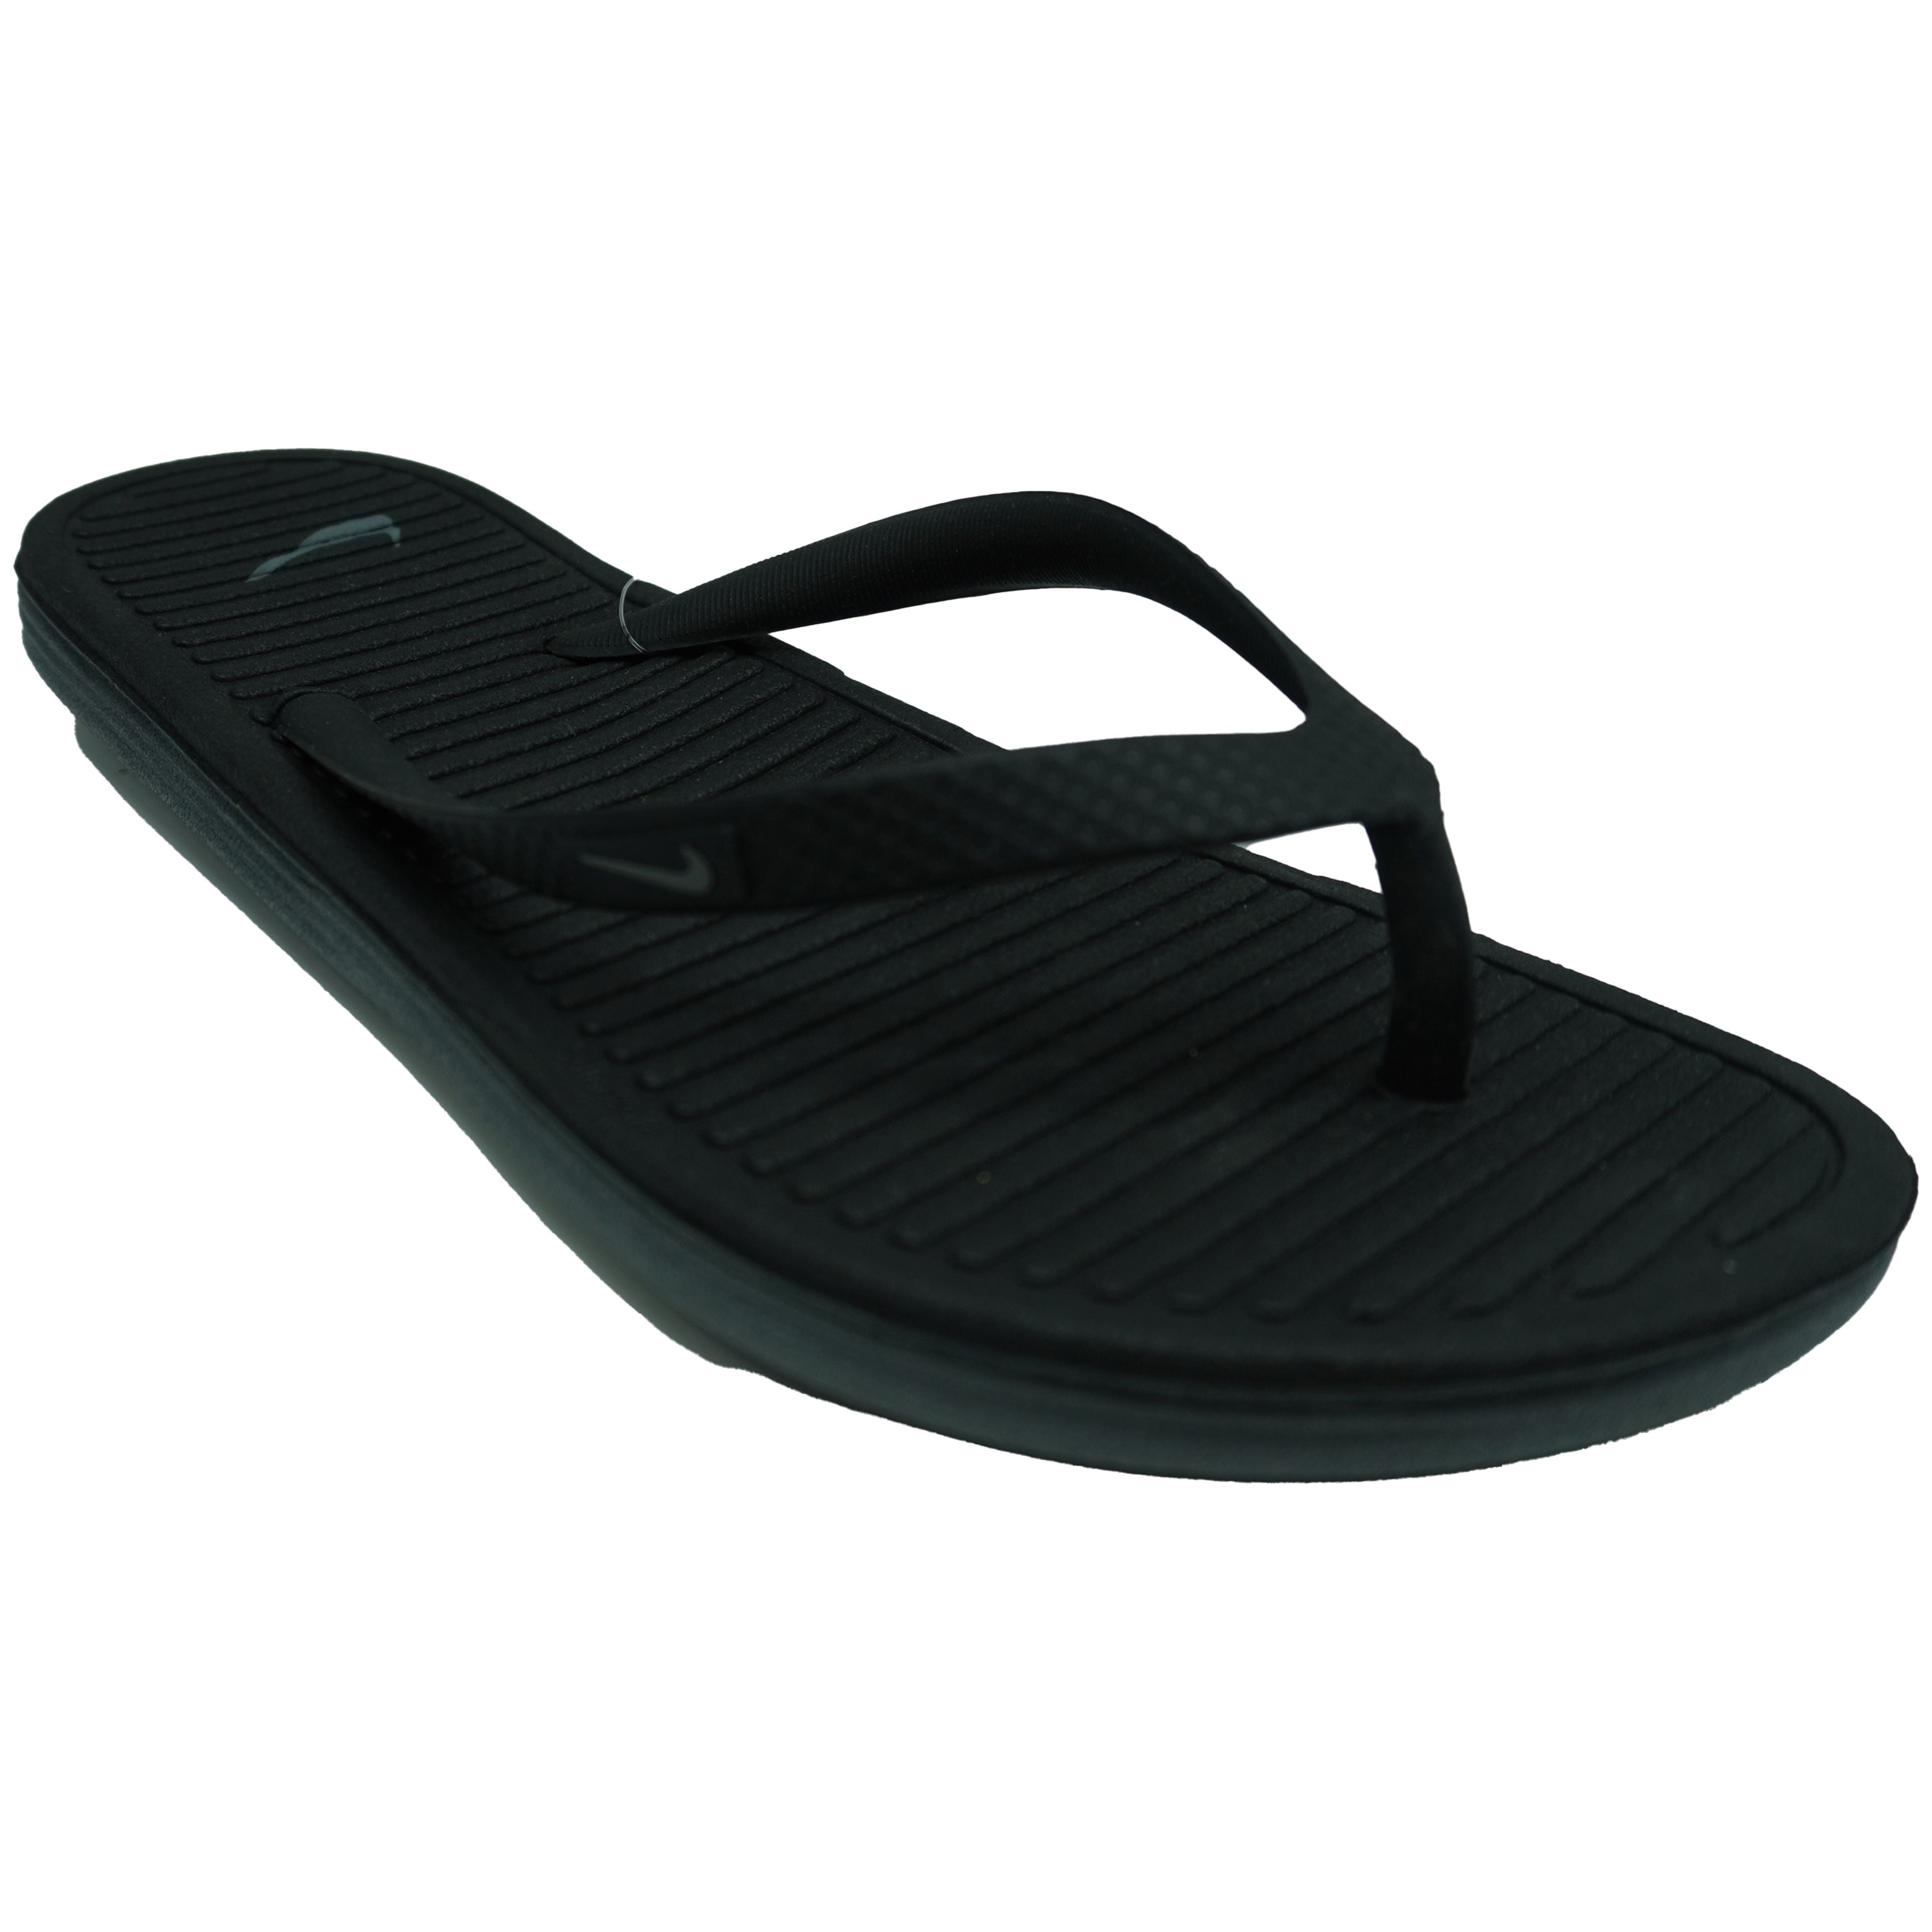 Nike Solarsoft Thong II Sandals Size 5